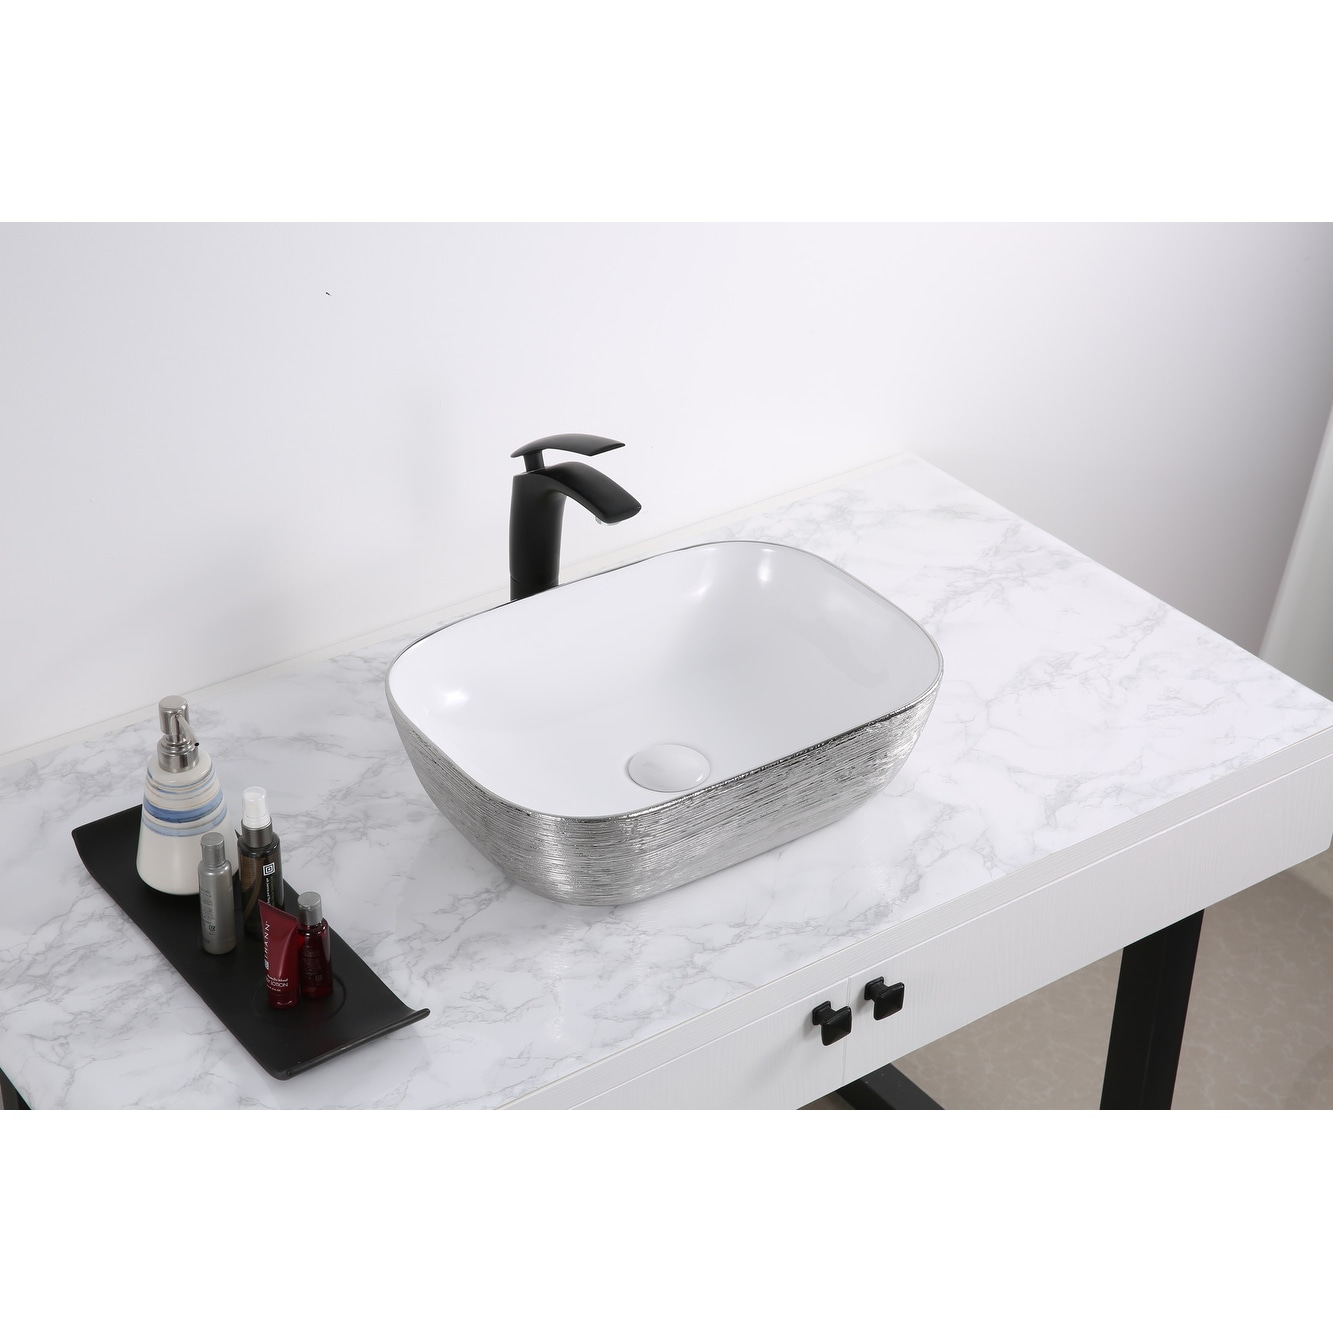 Ruvati 20 X 16 Inch Bathroom Vessel Sink Silver Decorative Art Above Vanity Counter White Ceramic Rvb2016ws 9 X 12 Overstock 32332752